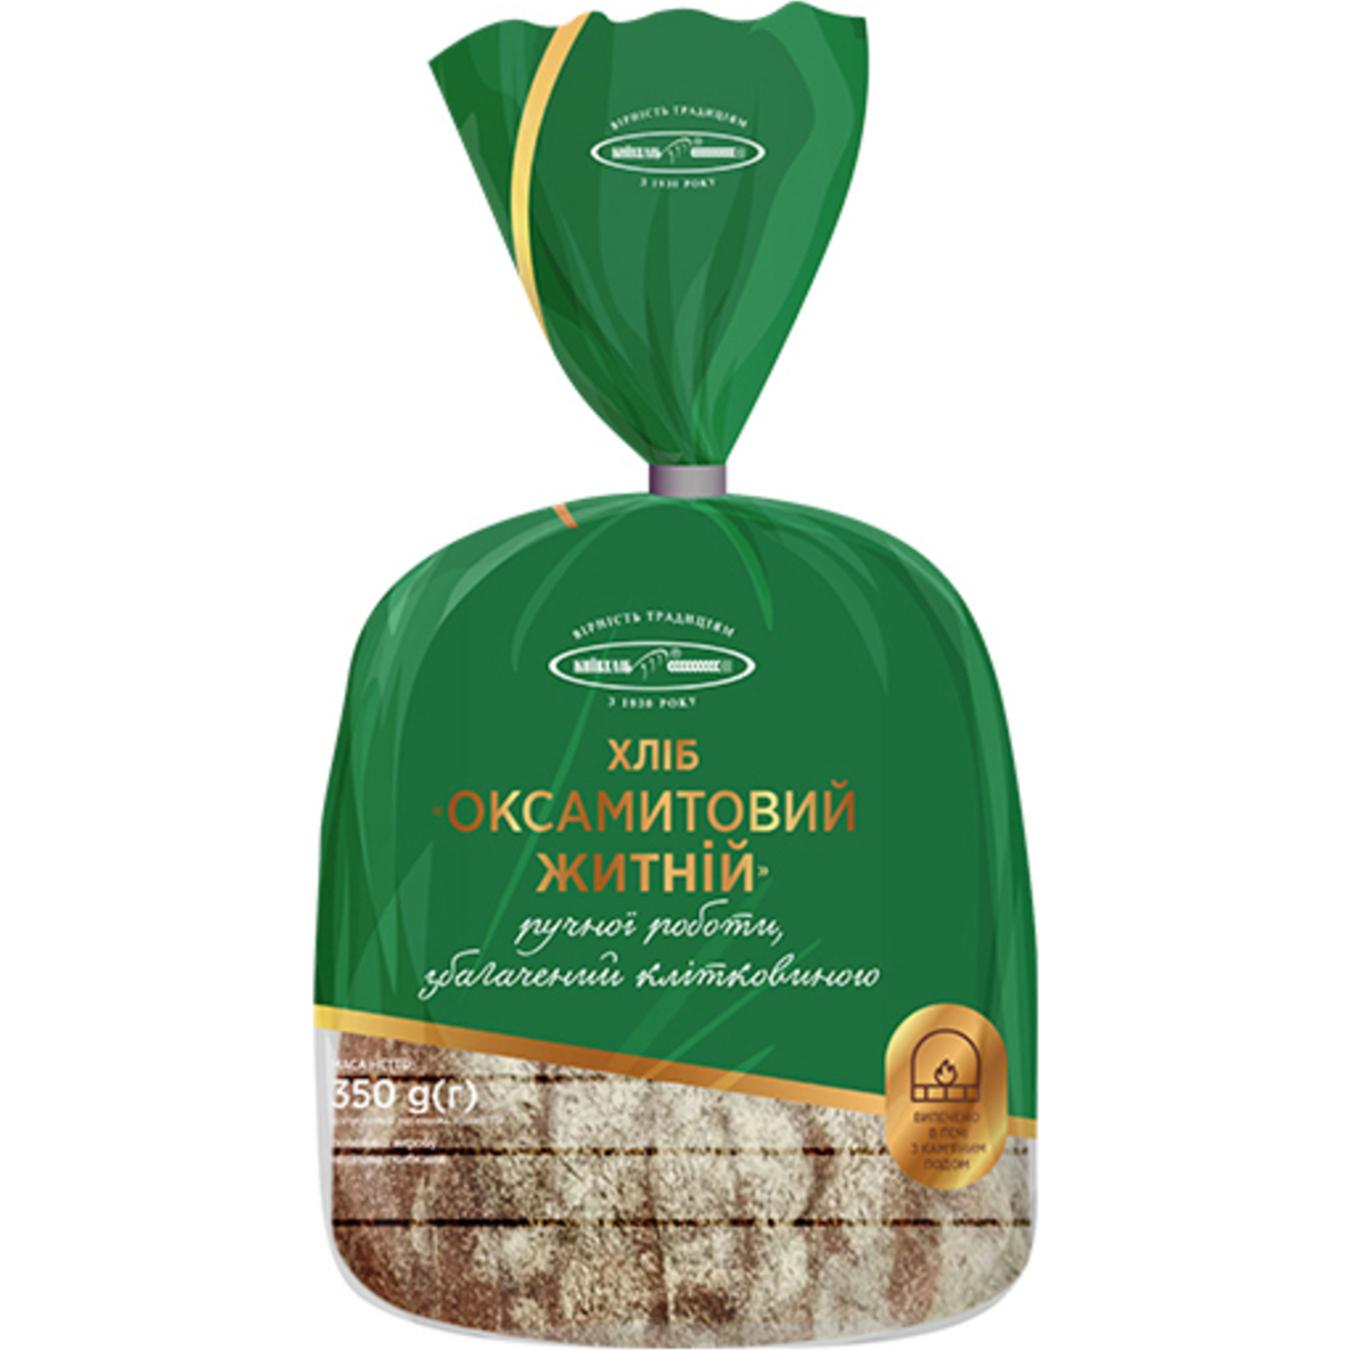 Kyivhlib Velvet Rye Cut Half Bread 350g